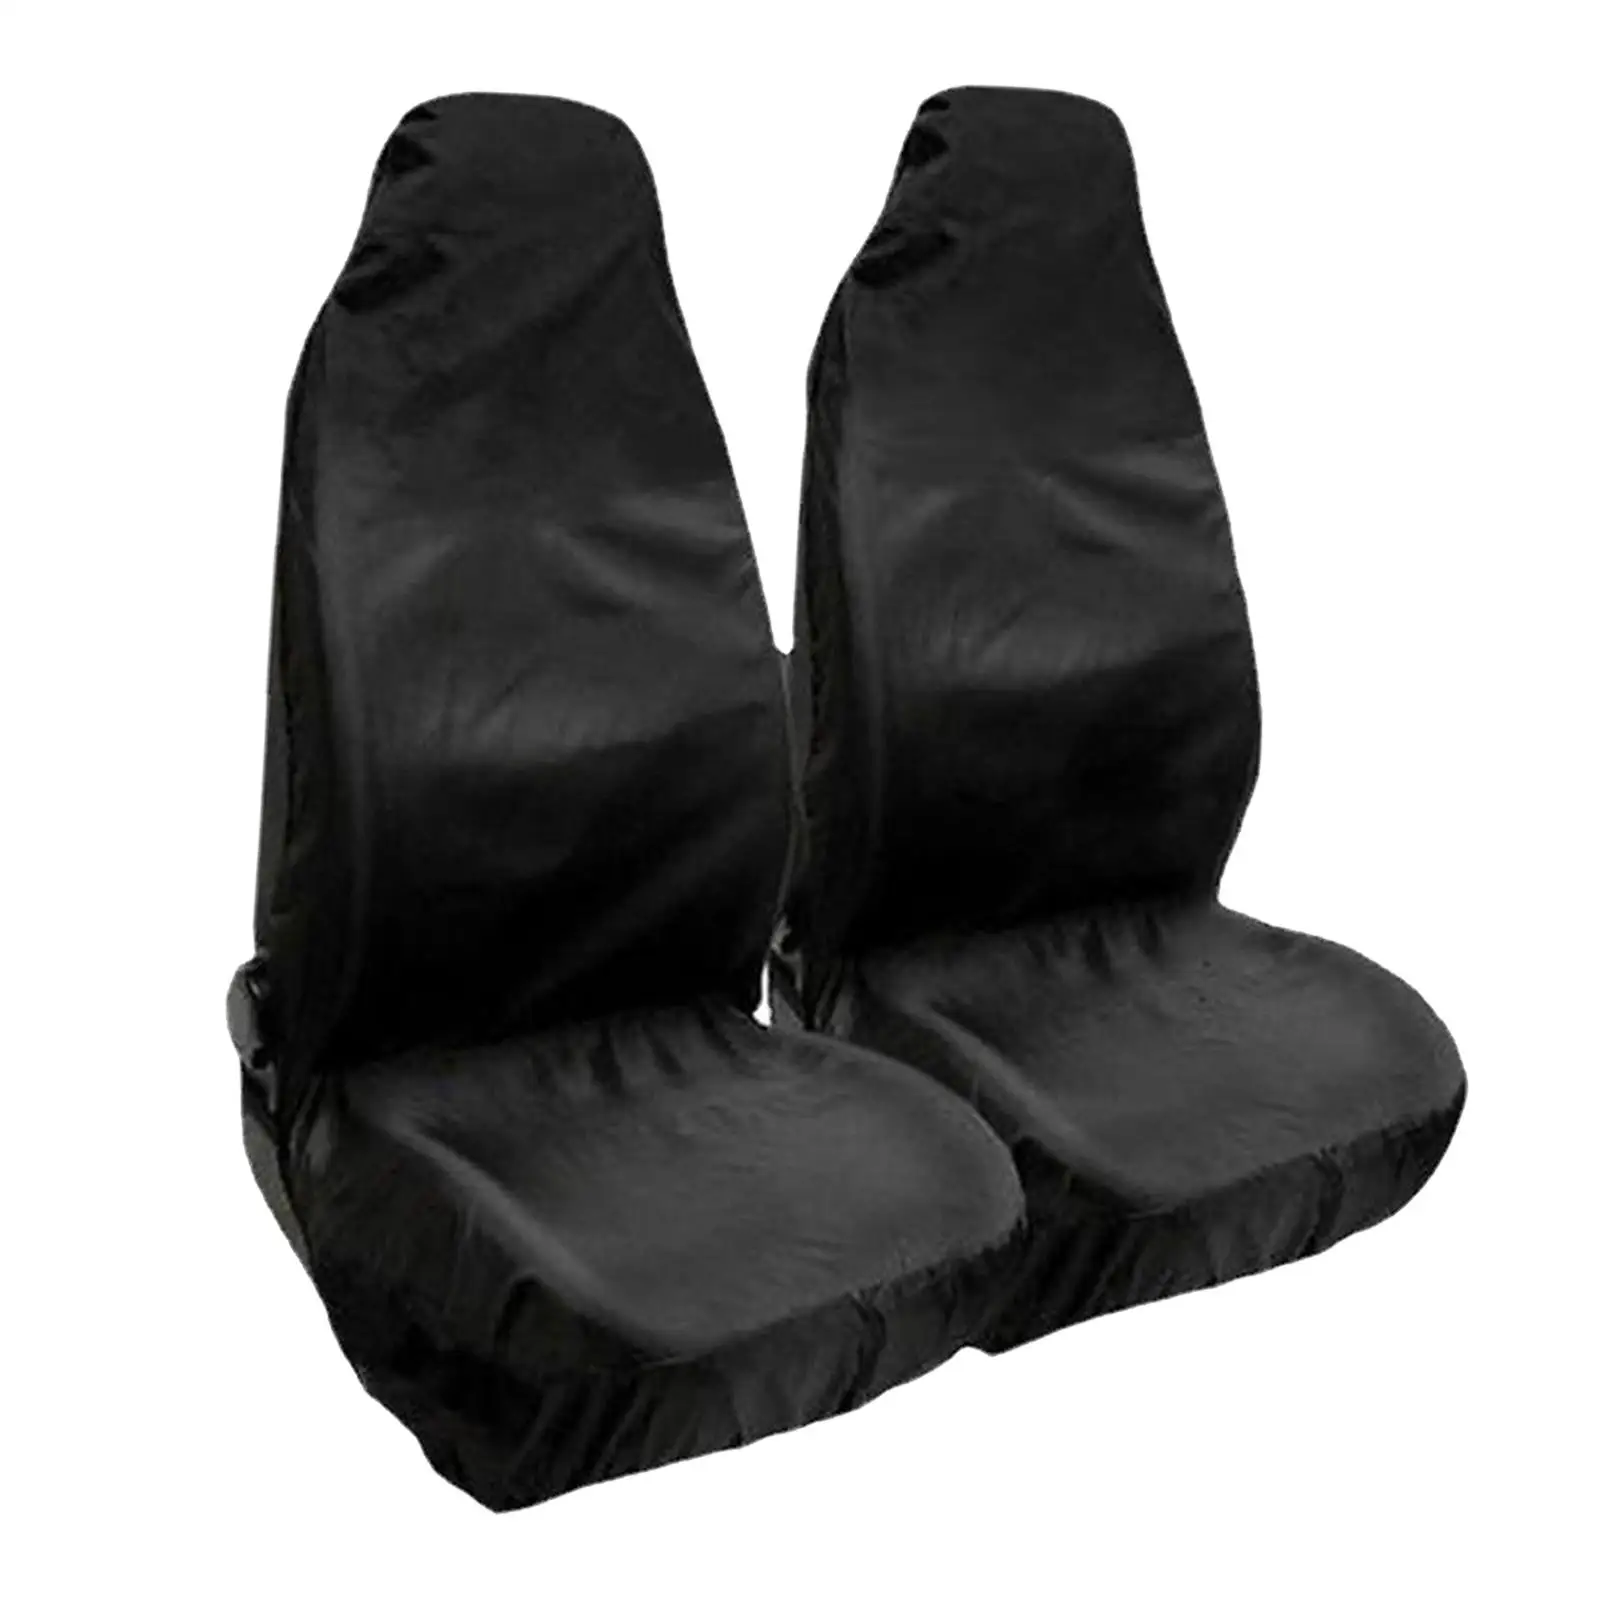 2x אוטומטי כיסוי מושב סט כרית מושב מכסים עם שקית אחסון Dustproof קל להגנה כיסוי מושב מגן עבור רכב שטח - 2